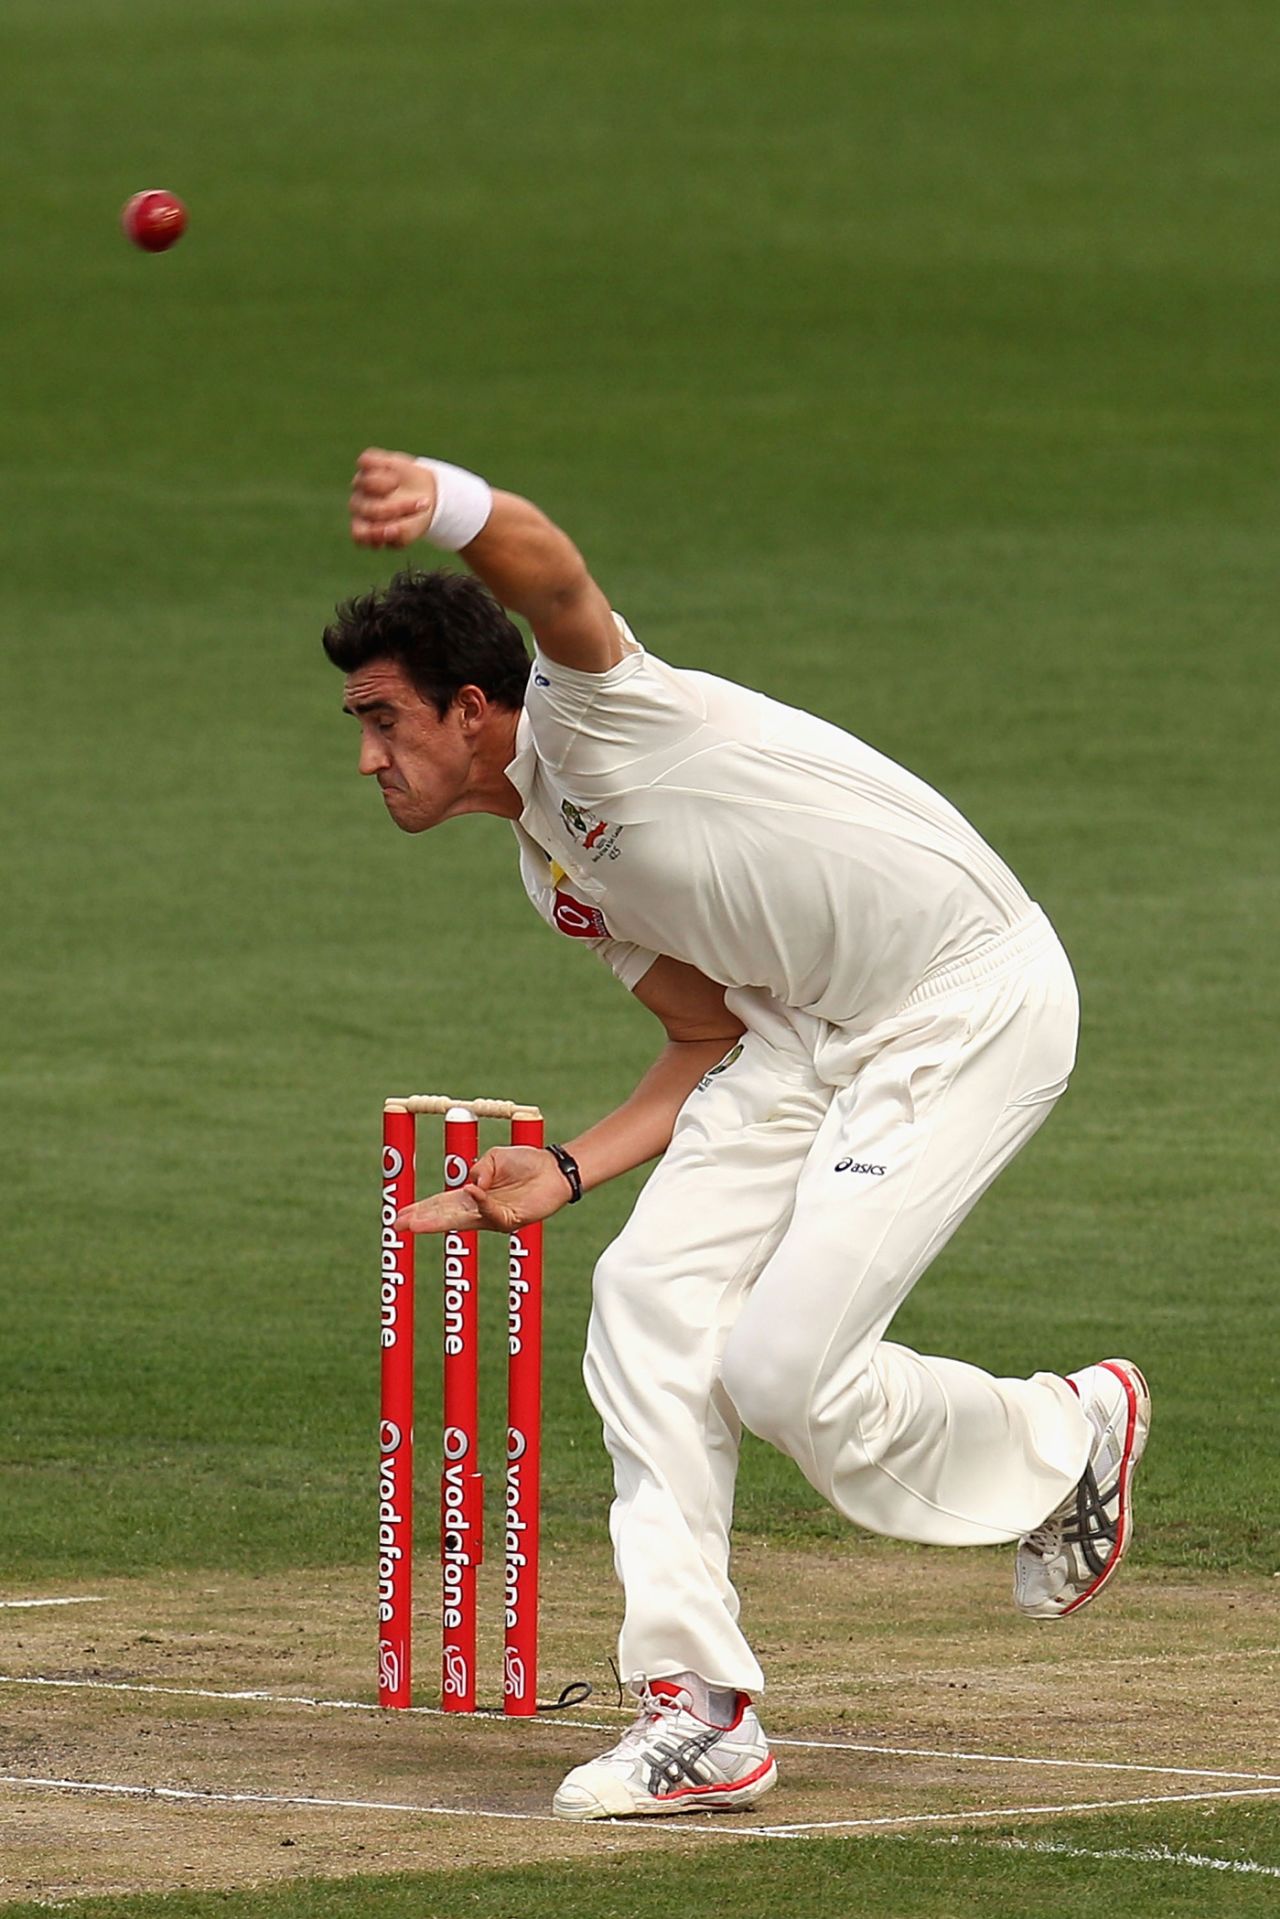 Mitchell Starc bowls, Australia v Sri Lanka, 1st Test, Hobart, 2nd day, December 15, 2012